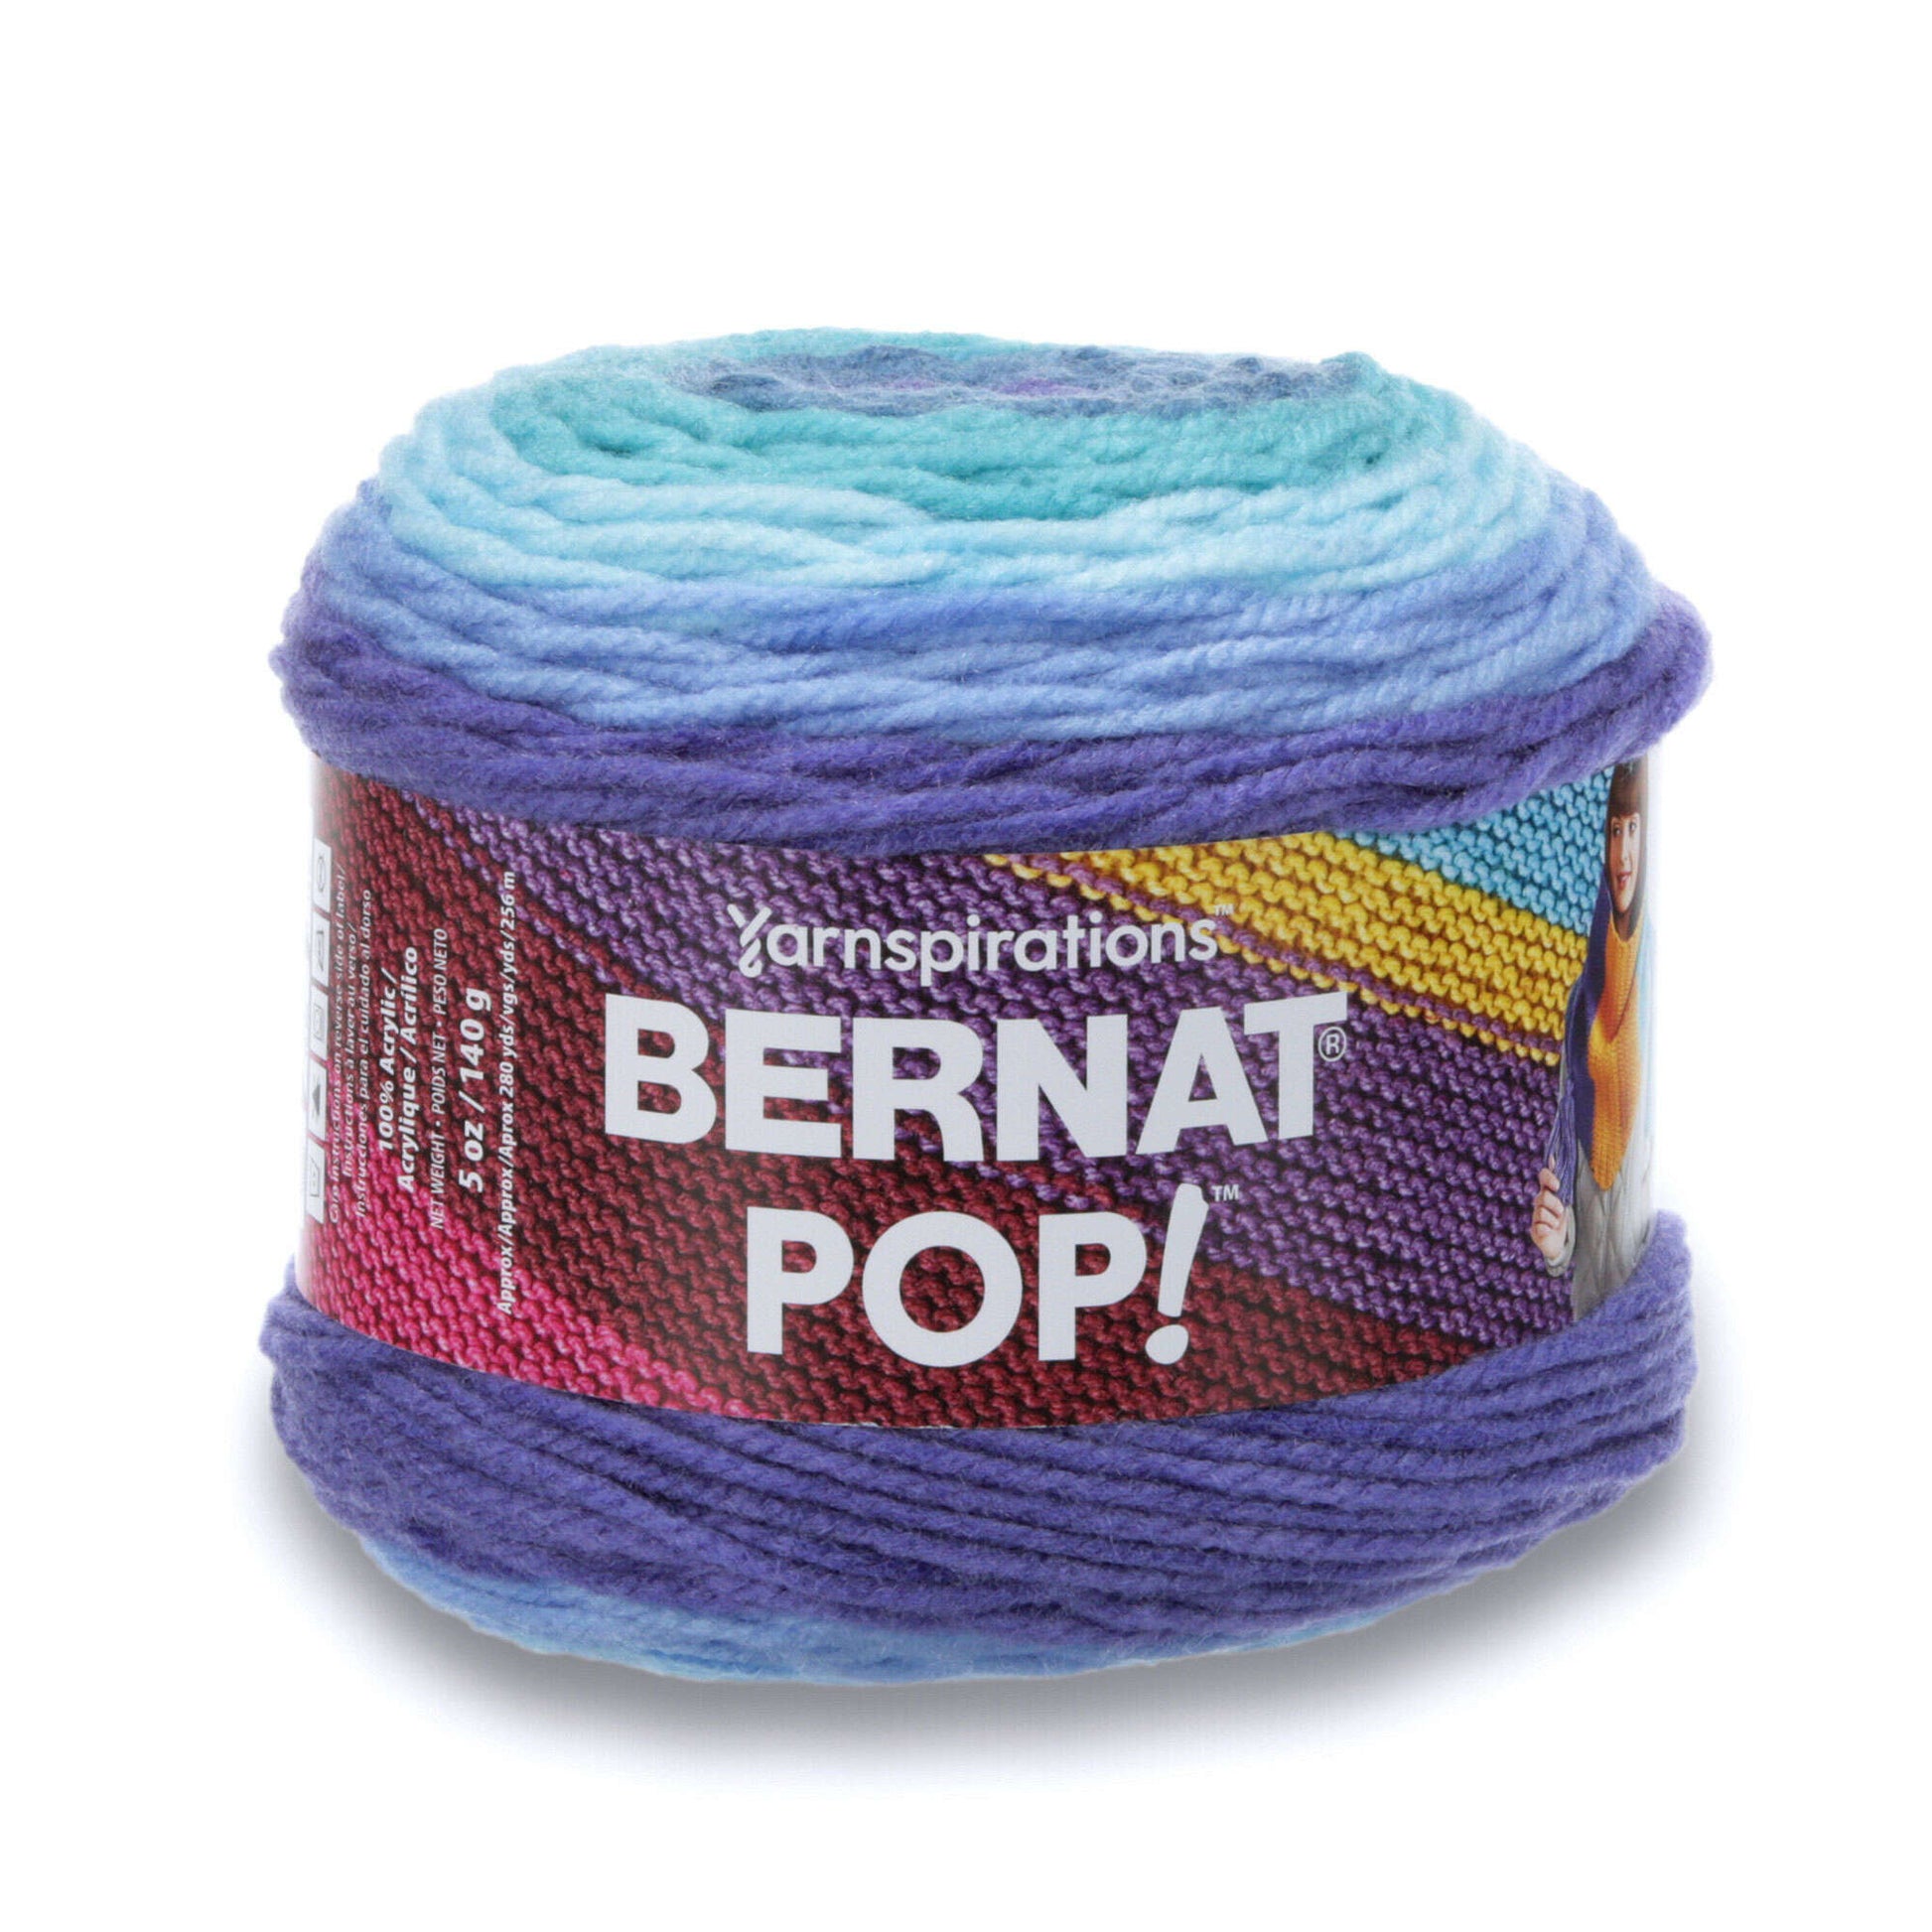 2 Pack Bernat Forever Fleece Yarn-Rumpus Red 166061-61029 - GettyCrafts